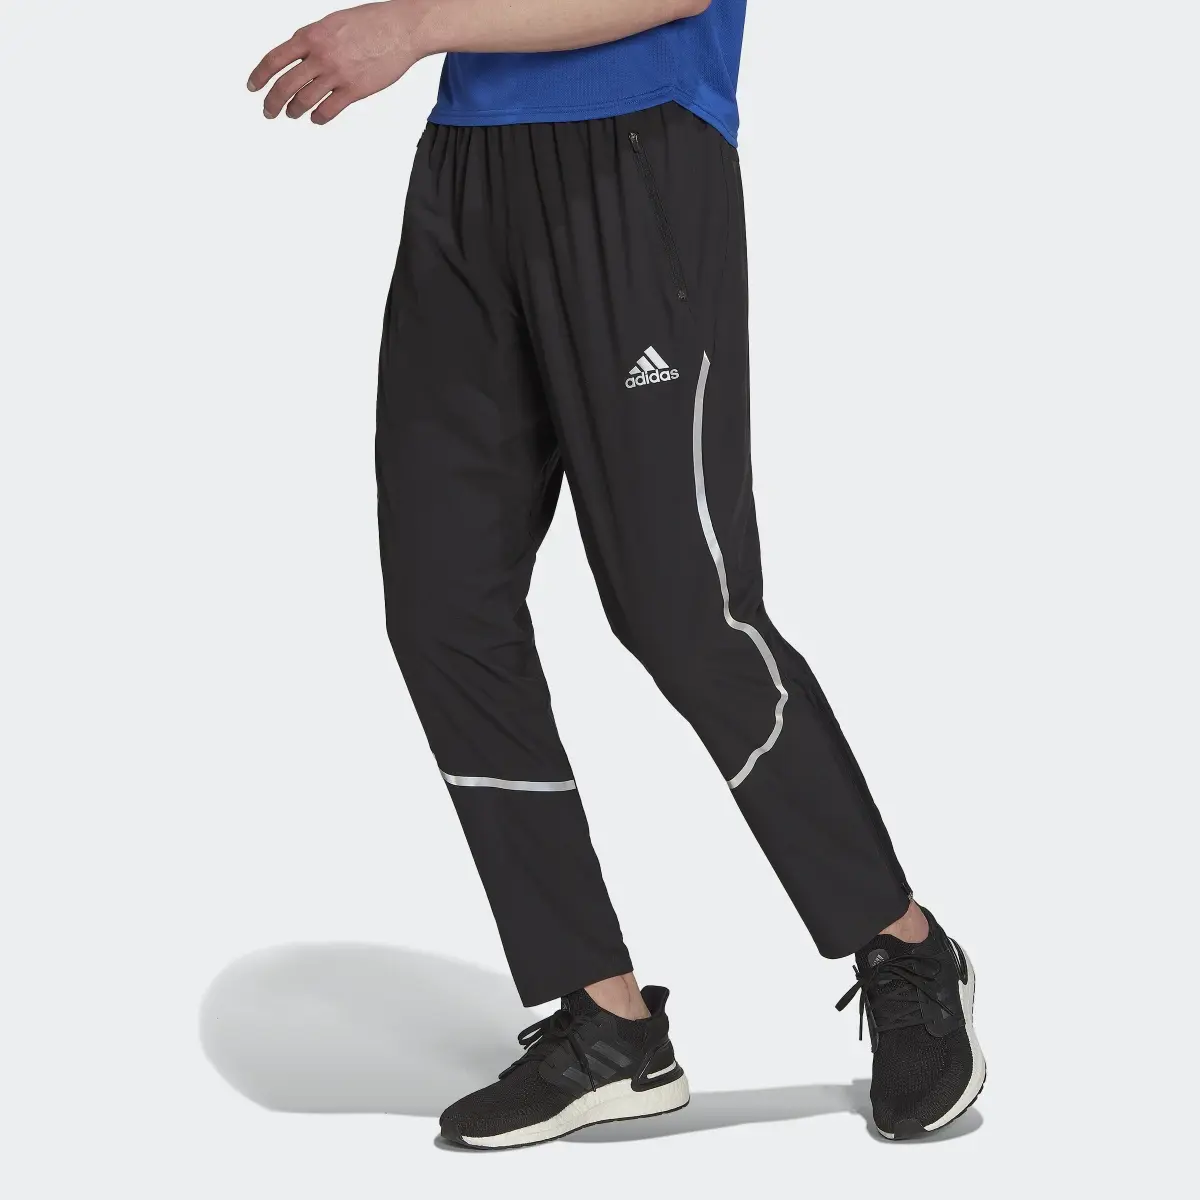 Adidas Adizero Pants. 1